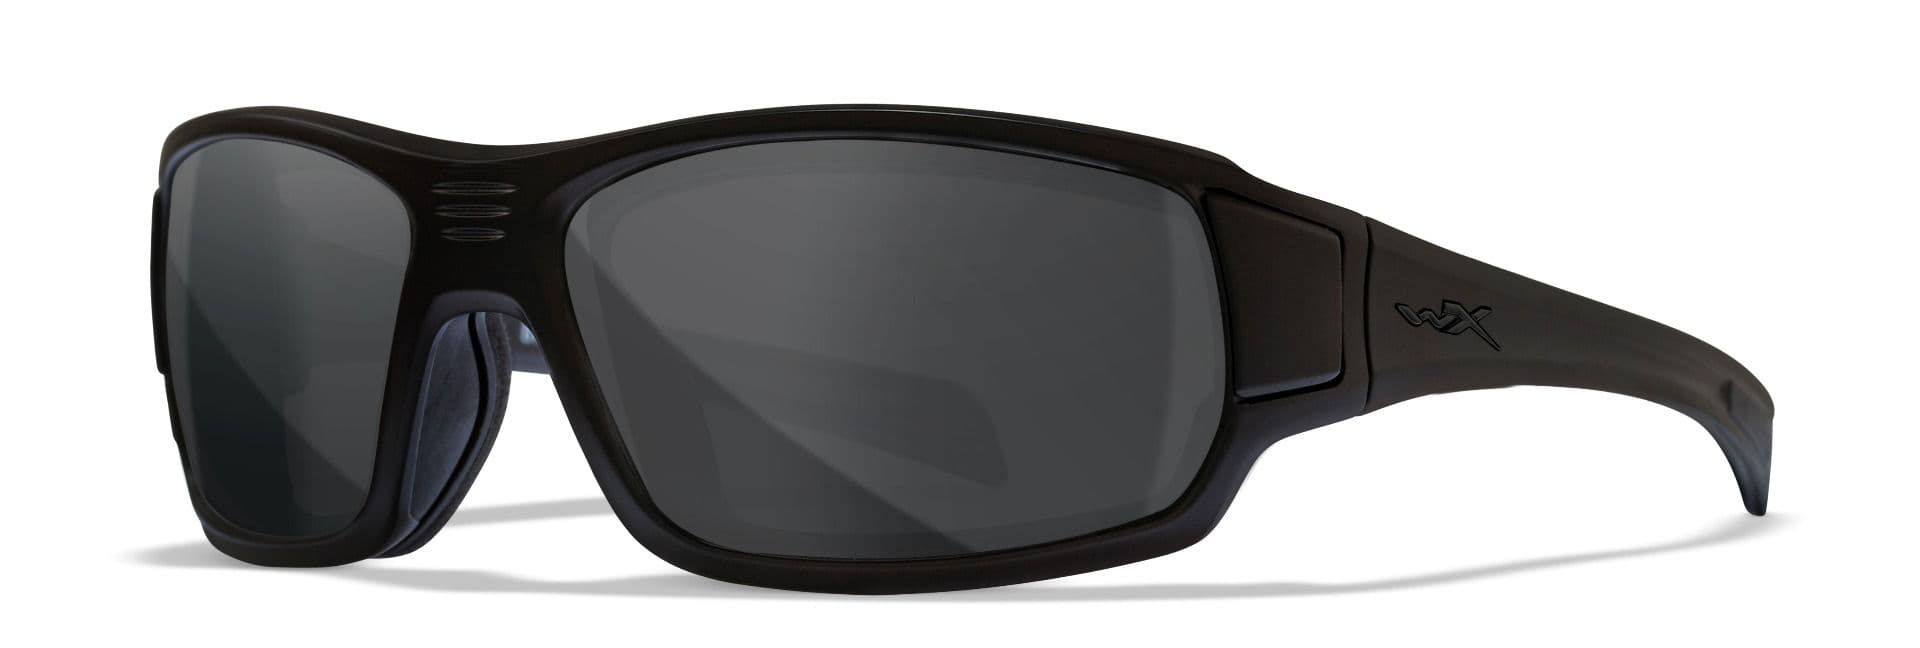 Wiley-X WX Breach Sunglasses